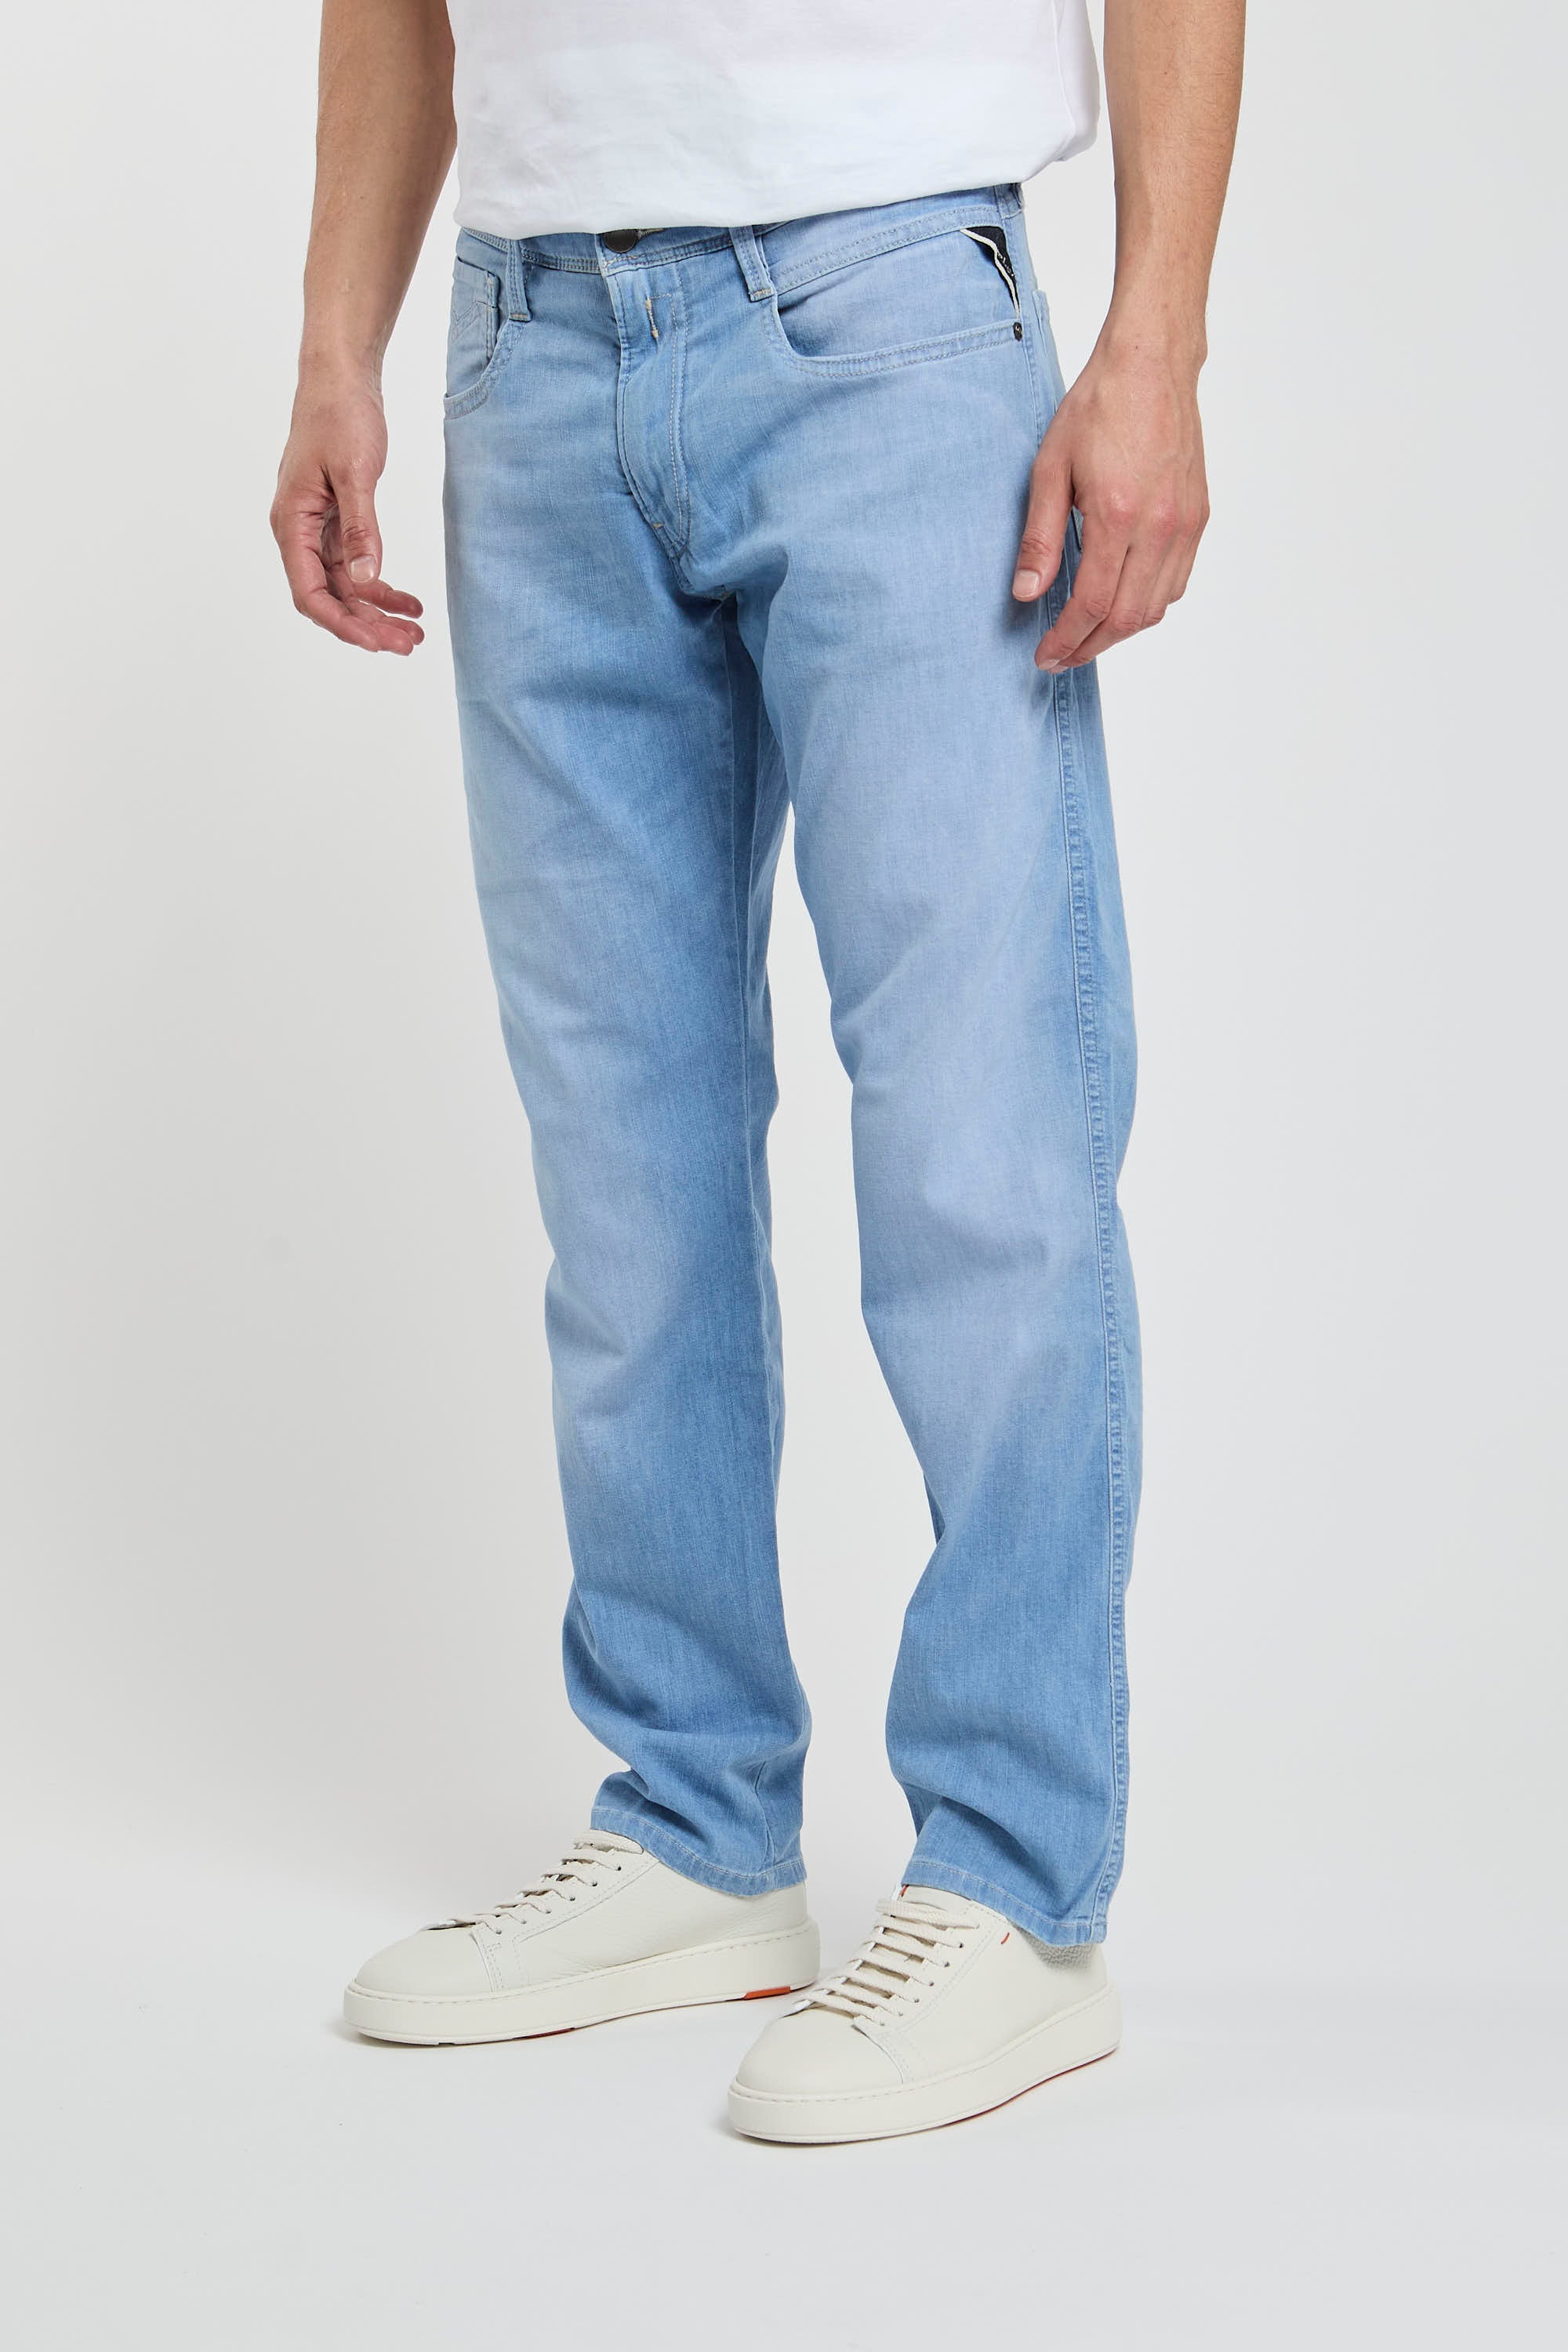 Replay Light Blue Slim Fit Jeans Cotton/Lyocell/Elastomultiester/Elastane-1